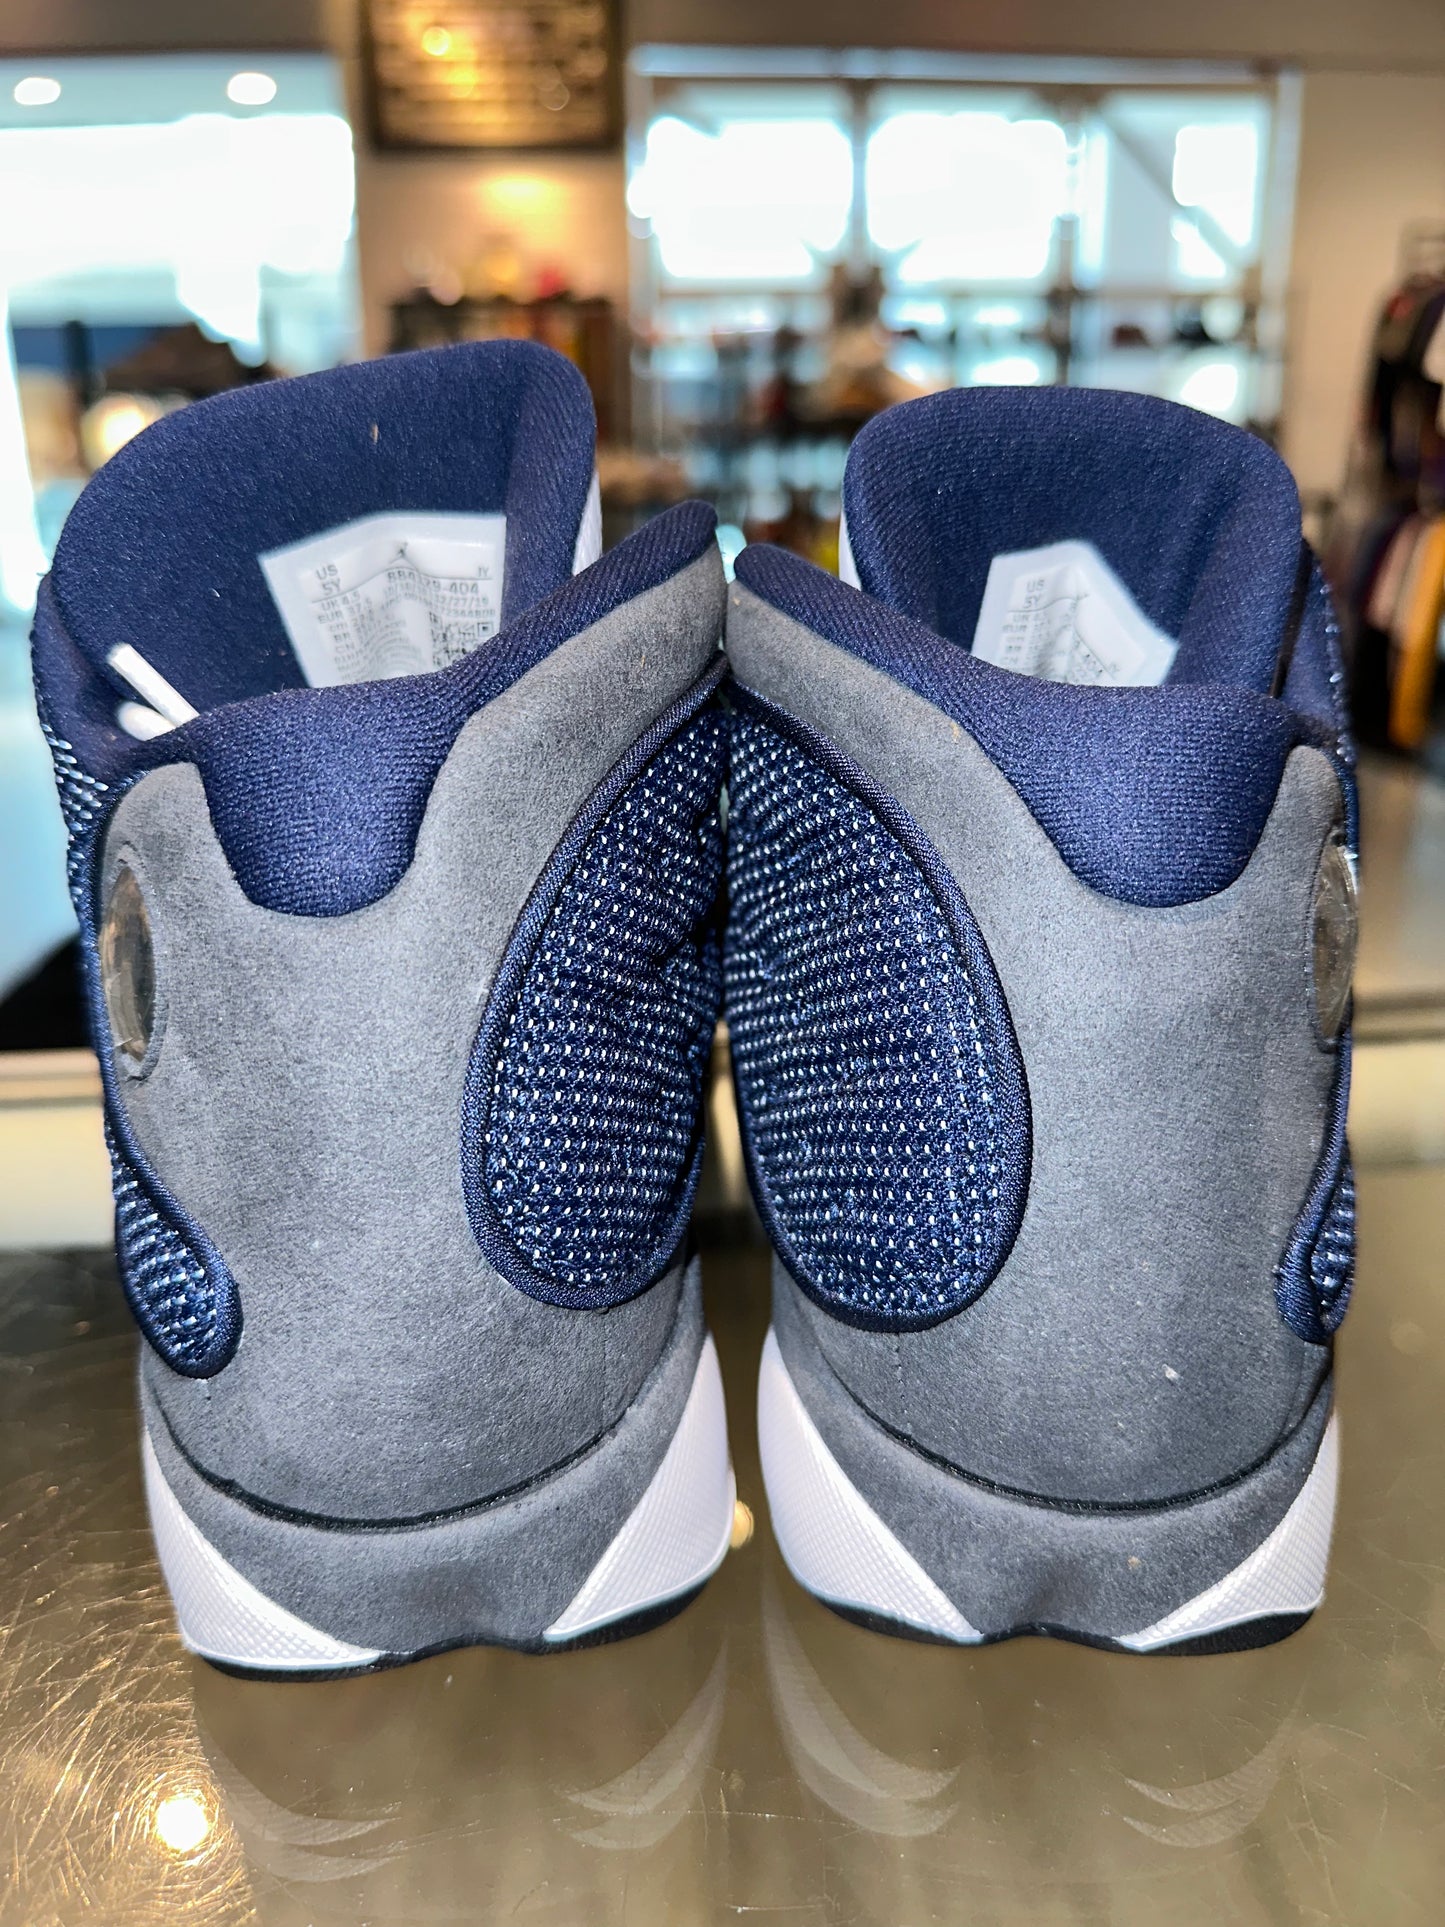 Size 5Y Air Jordan 13 “Flint” Brand New (Mall)